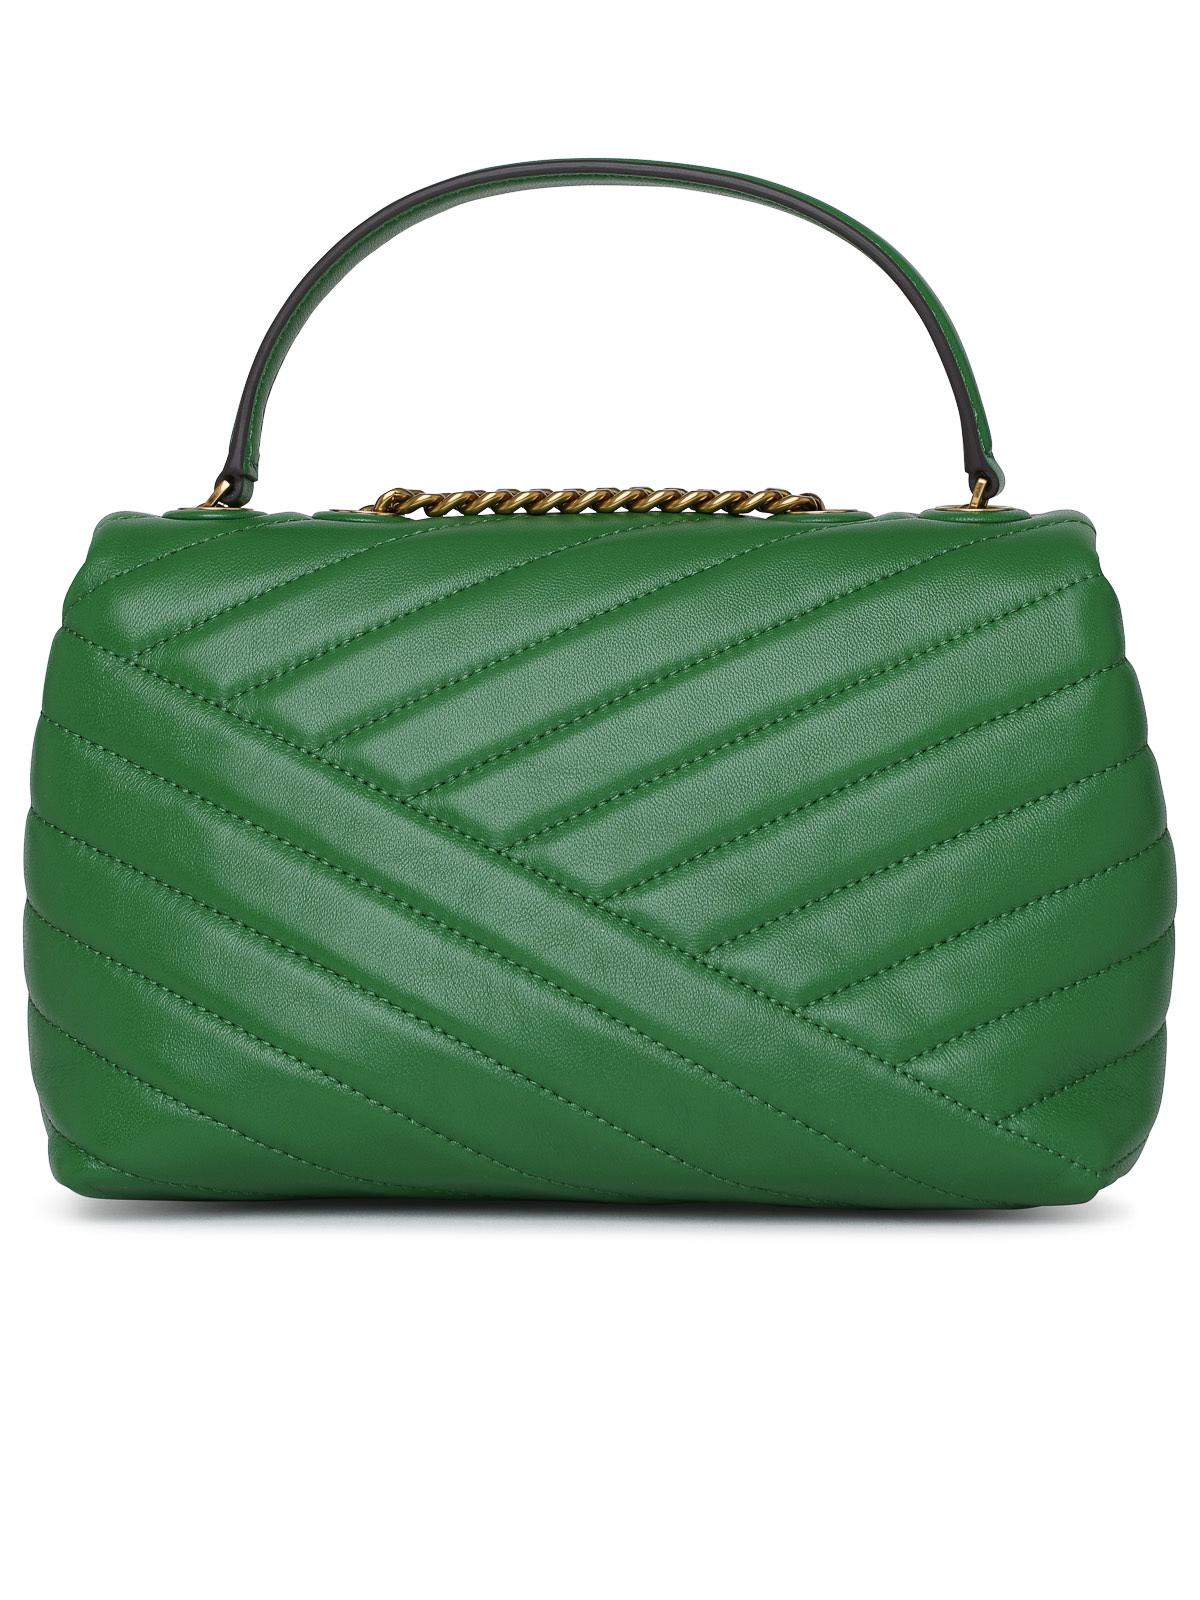 Cross body bags Tory Burch - Small kira bag in green leather - 90452301